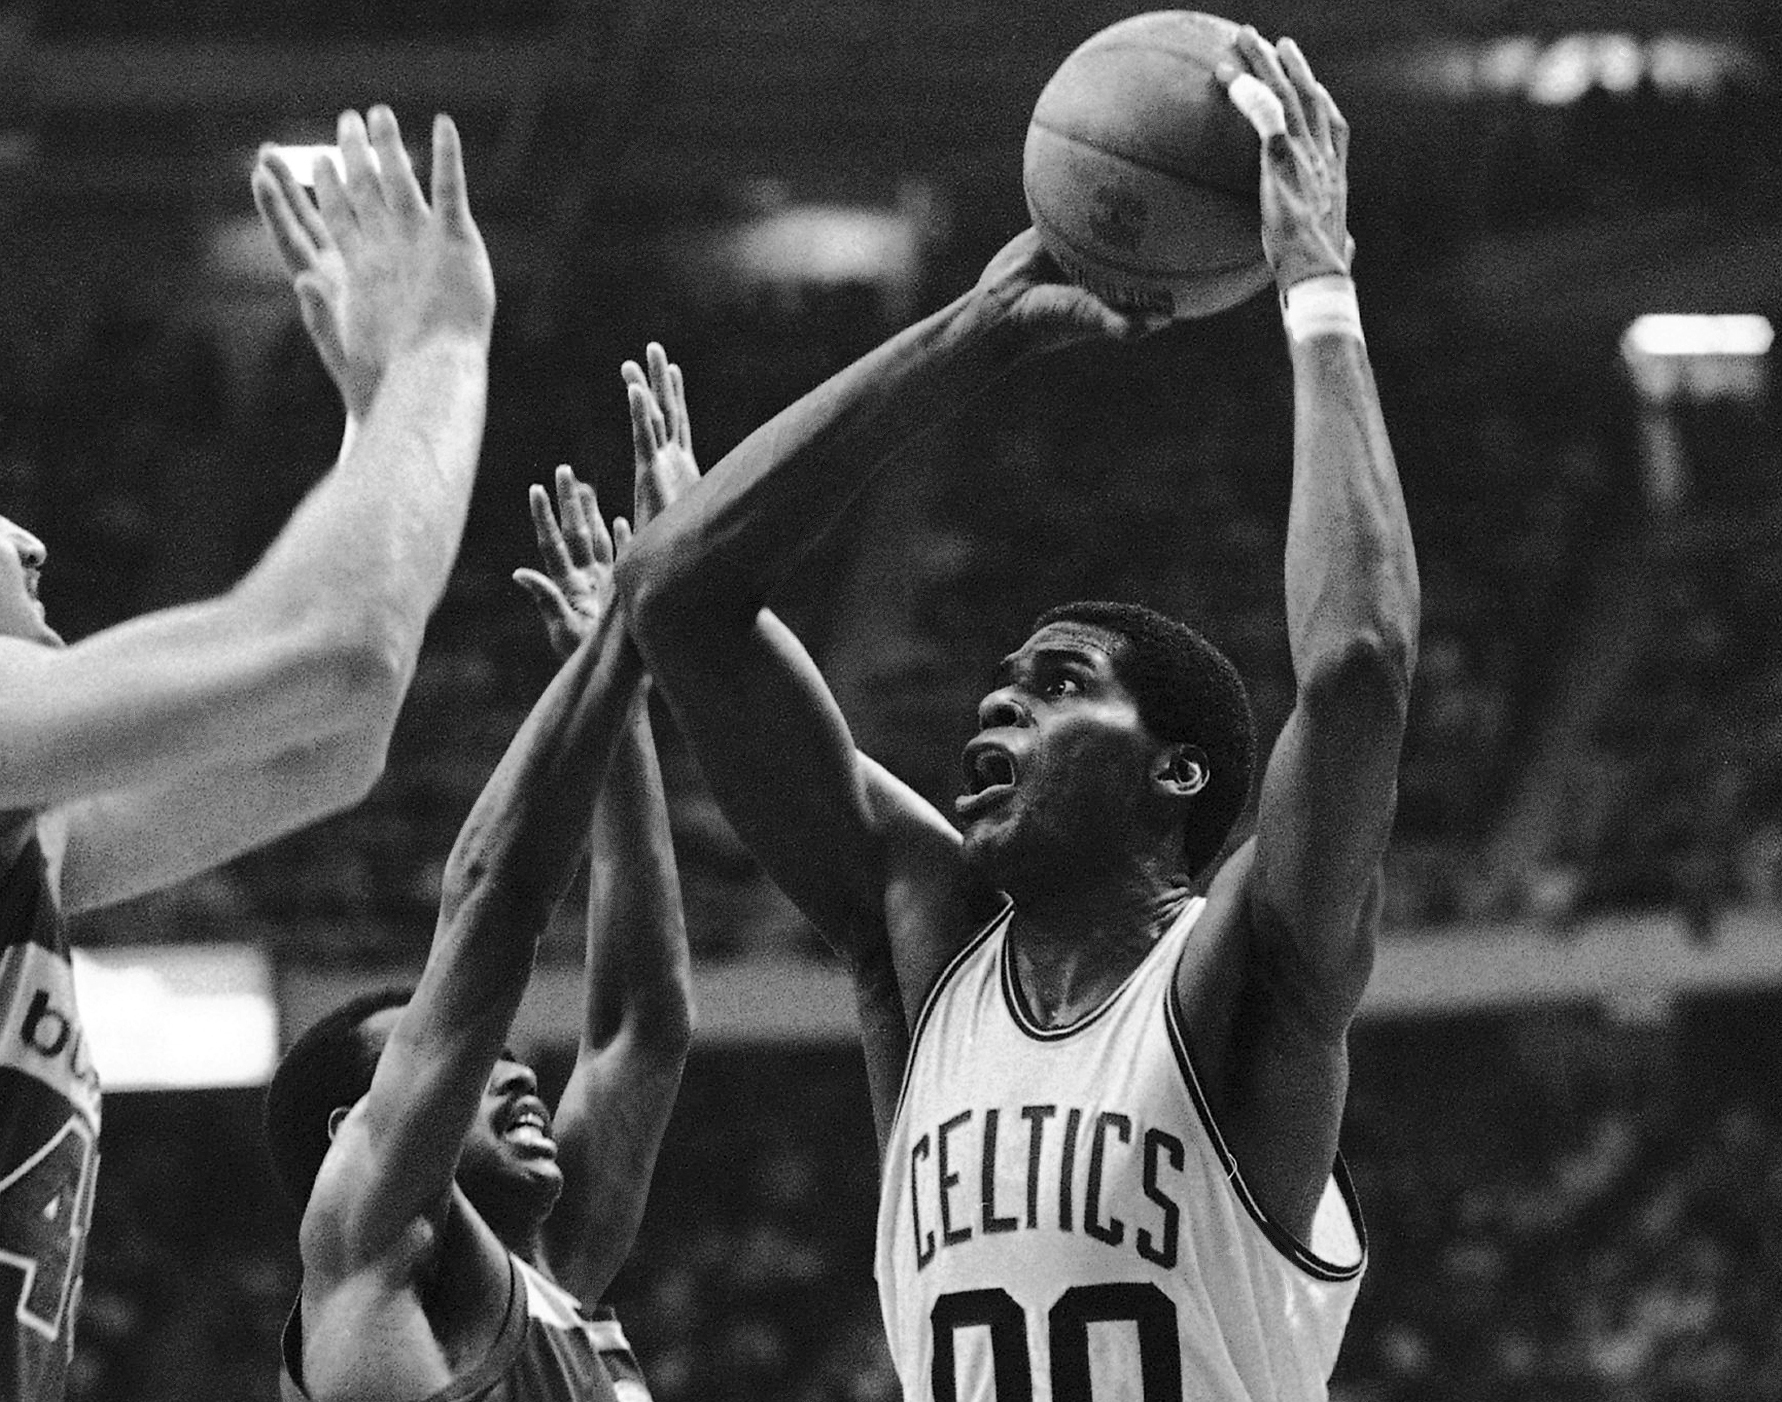 Is Celtics coach Sam Cassell the heir apparent in Boston?